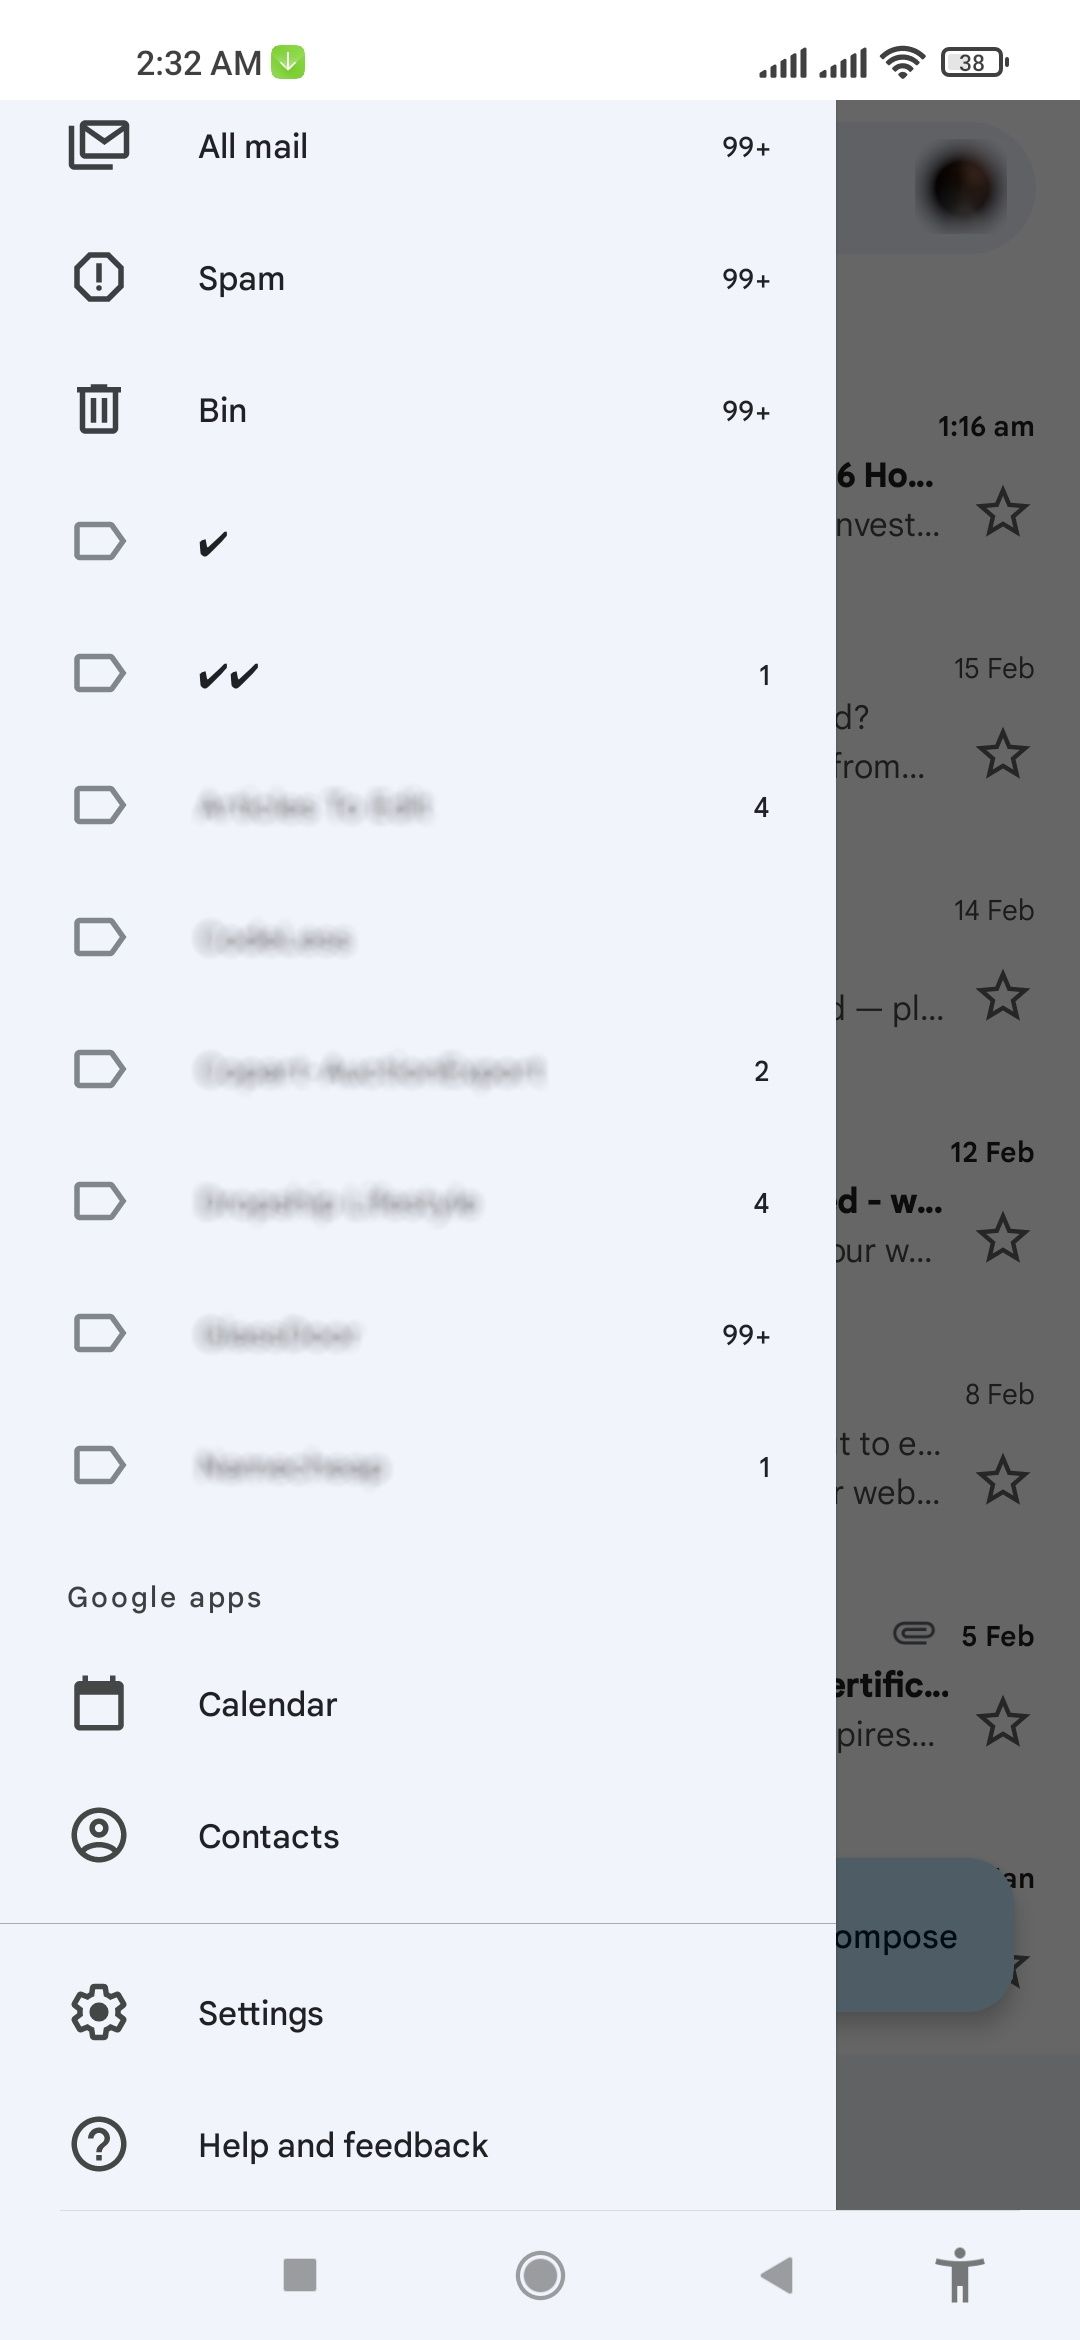 Gmail Dark Mode settings